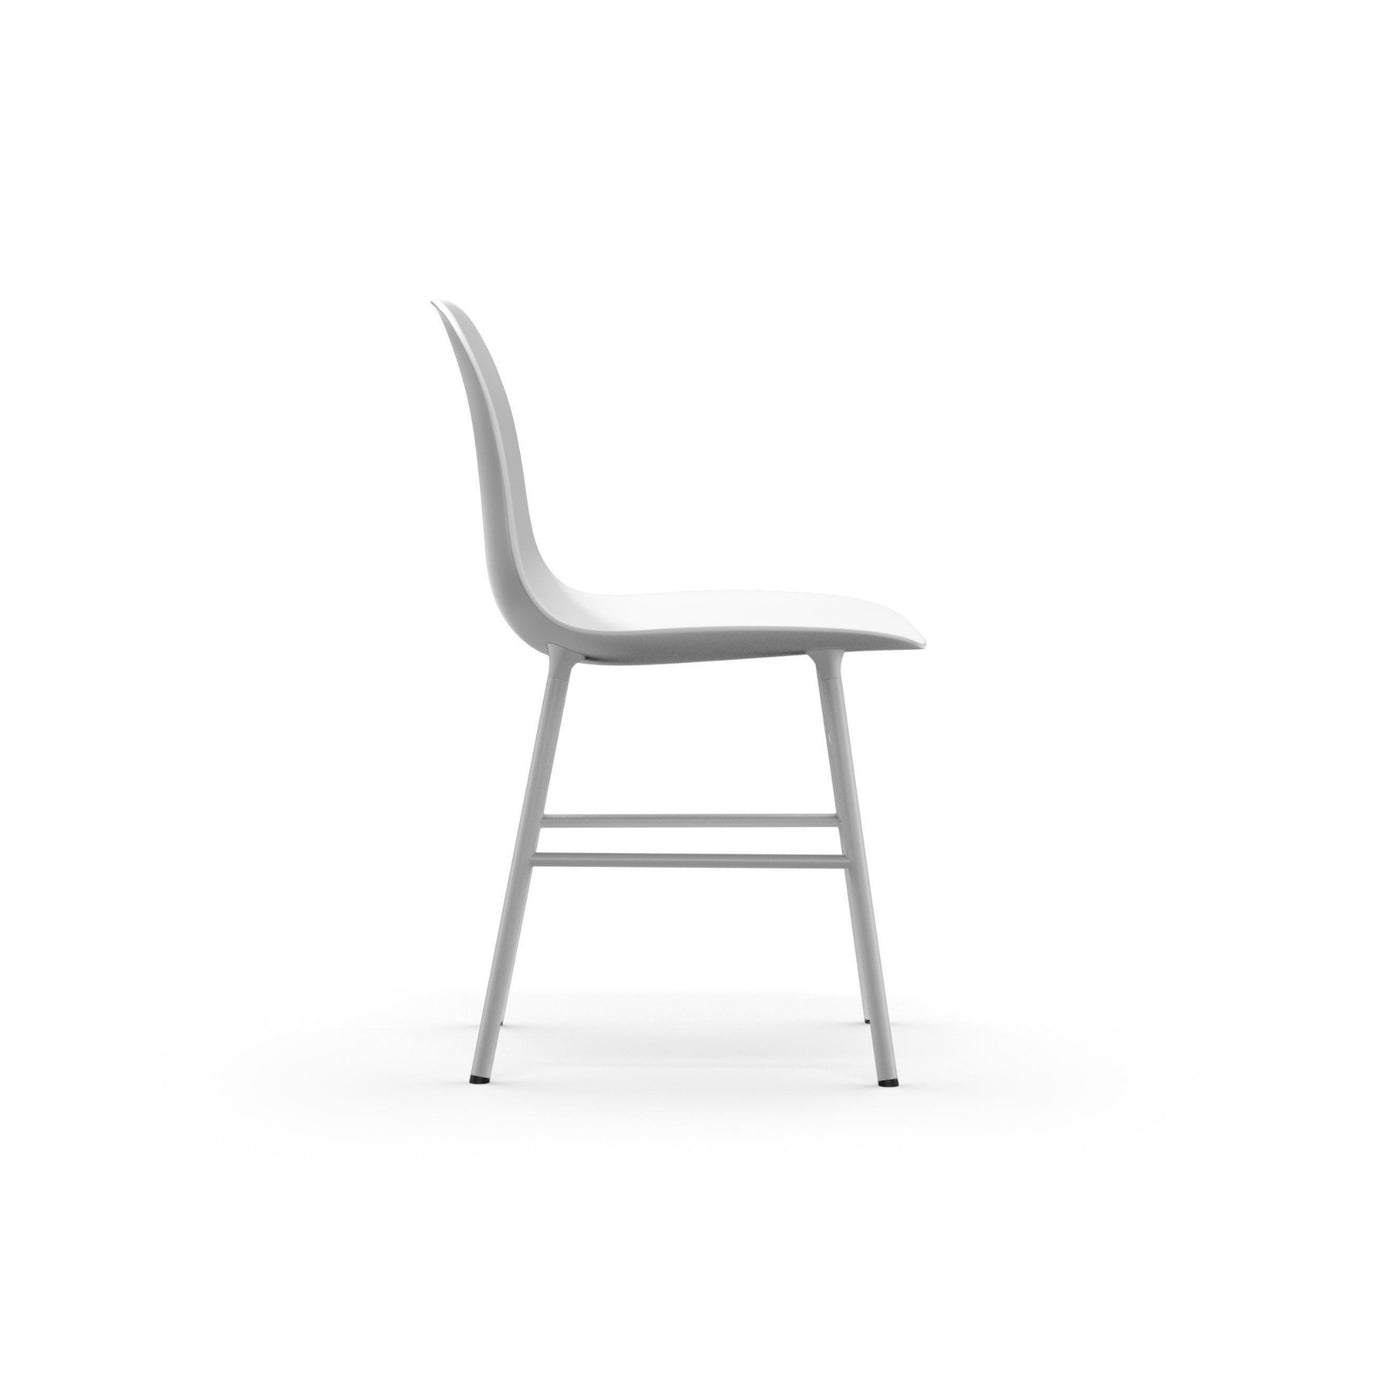 Normann Copenhagen Form Chair Steel at someday designs #colour_white